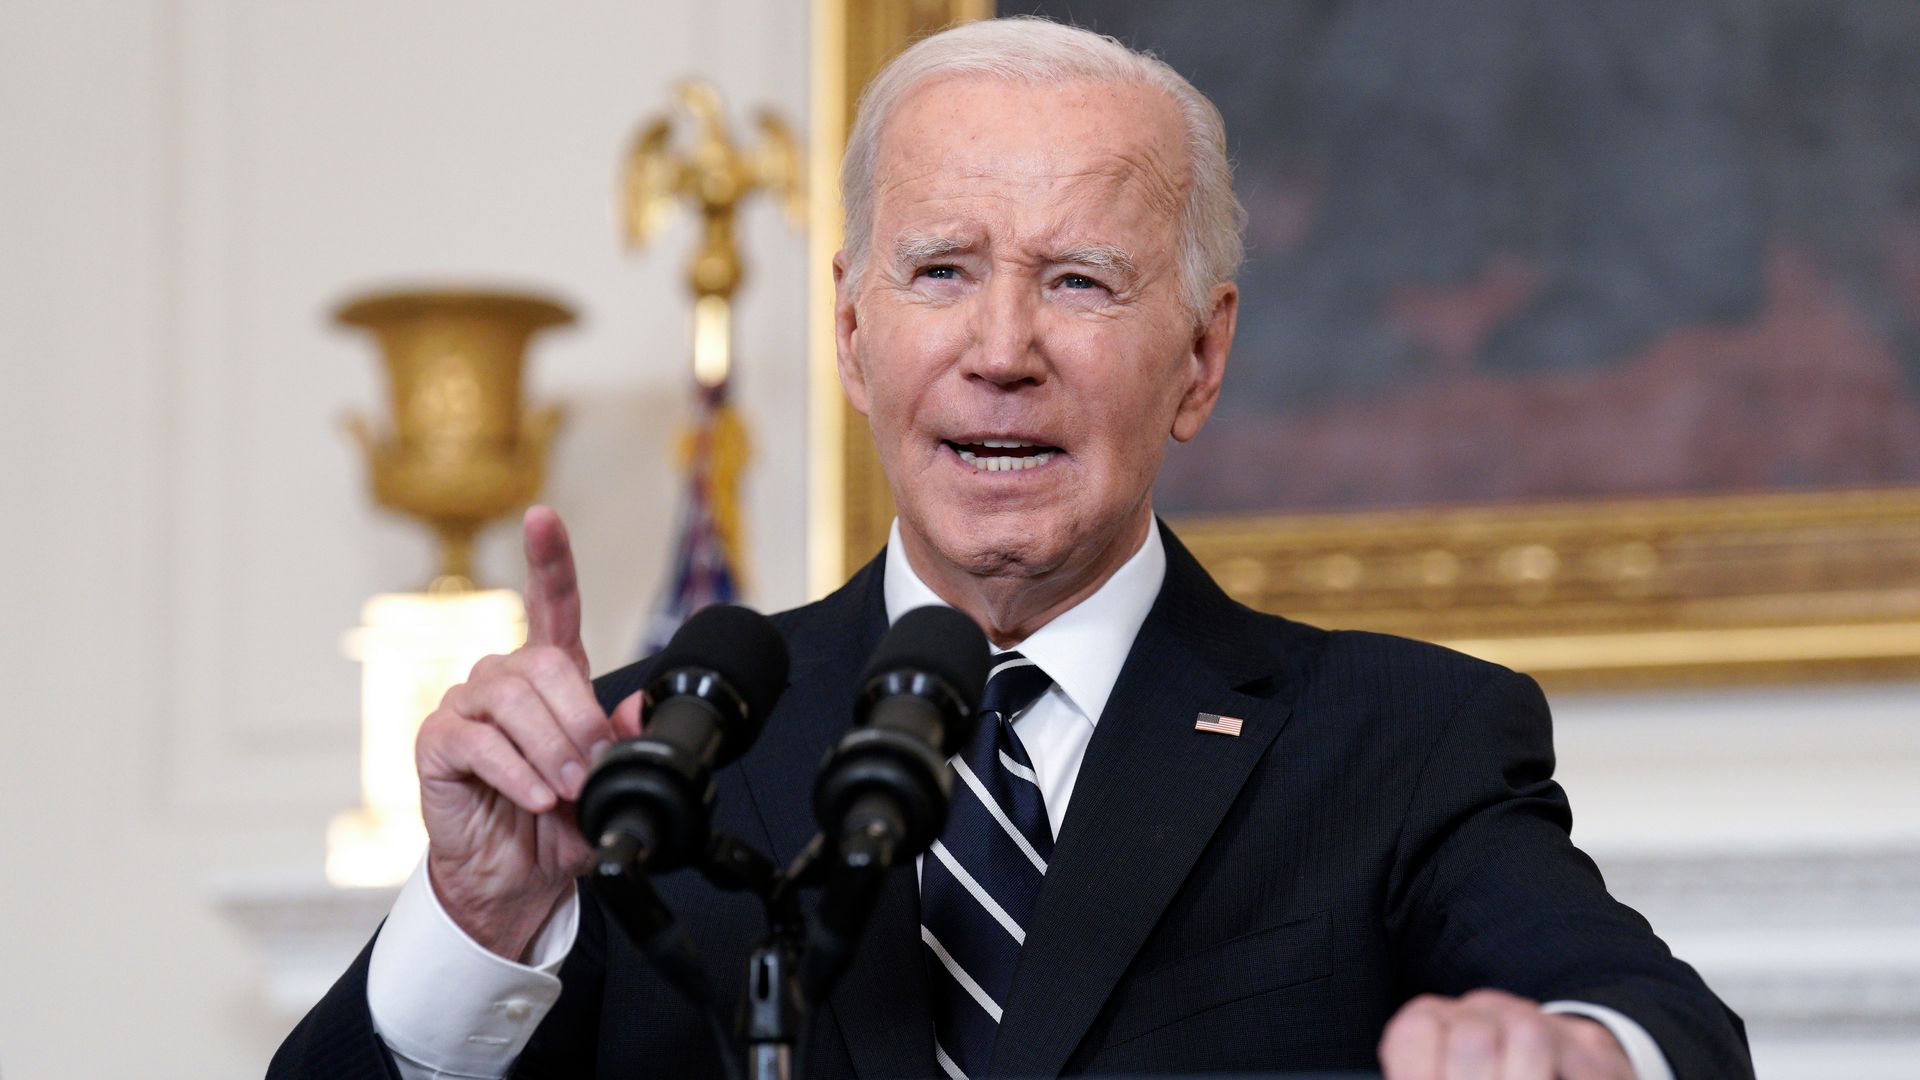 President Biden speaks behind microphones at the White House.